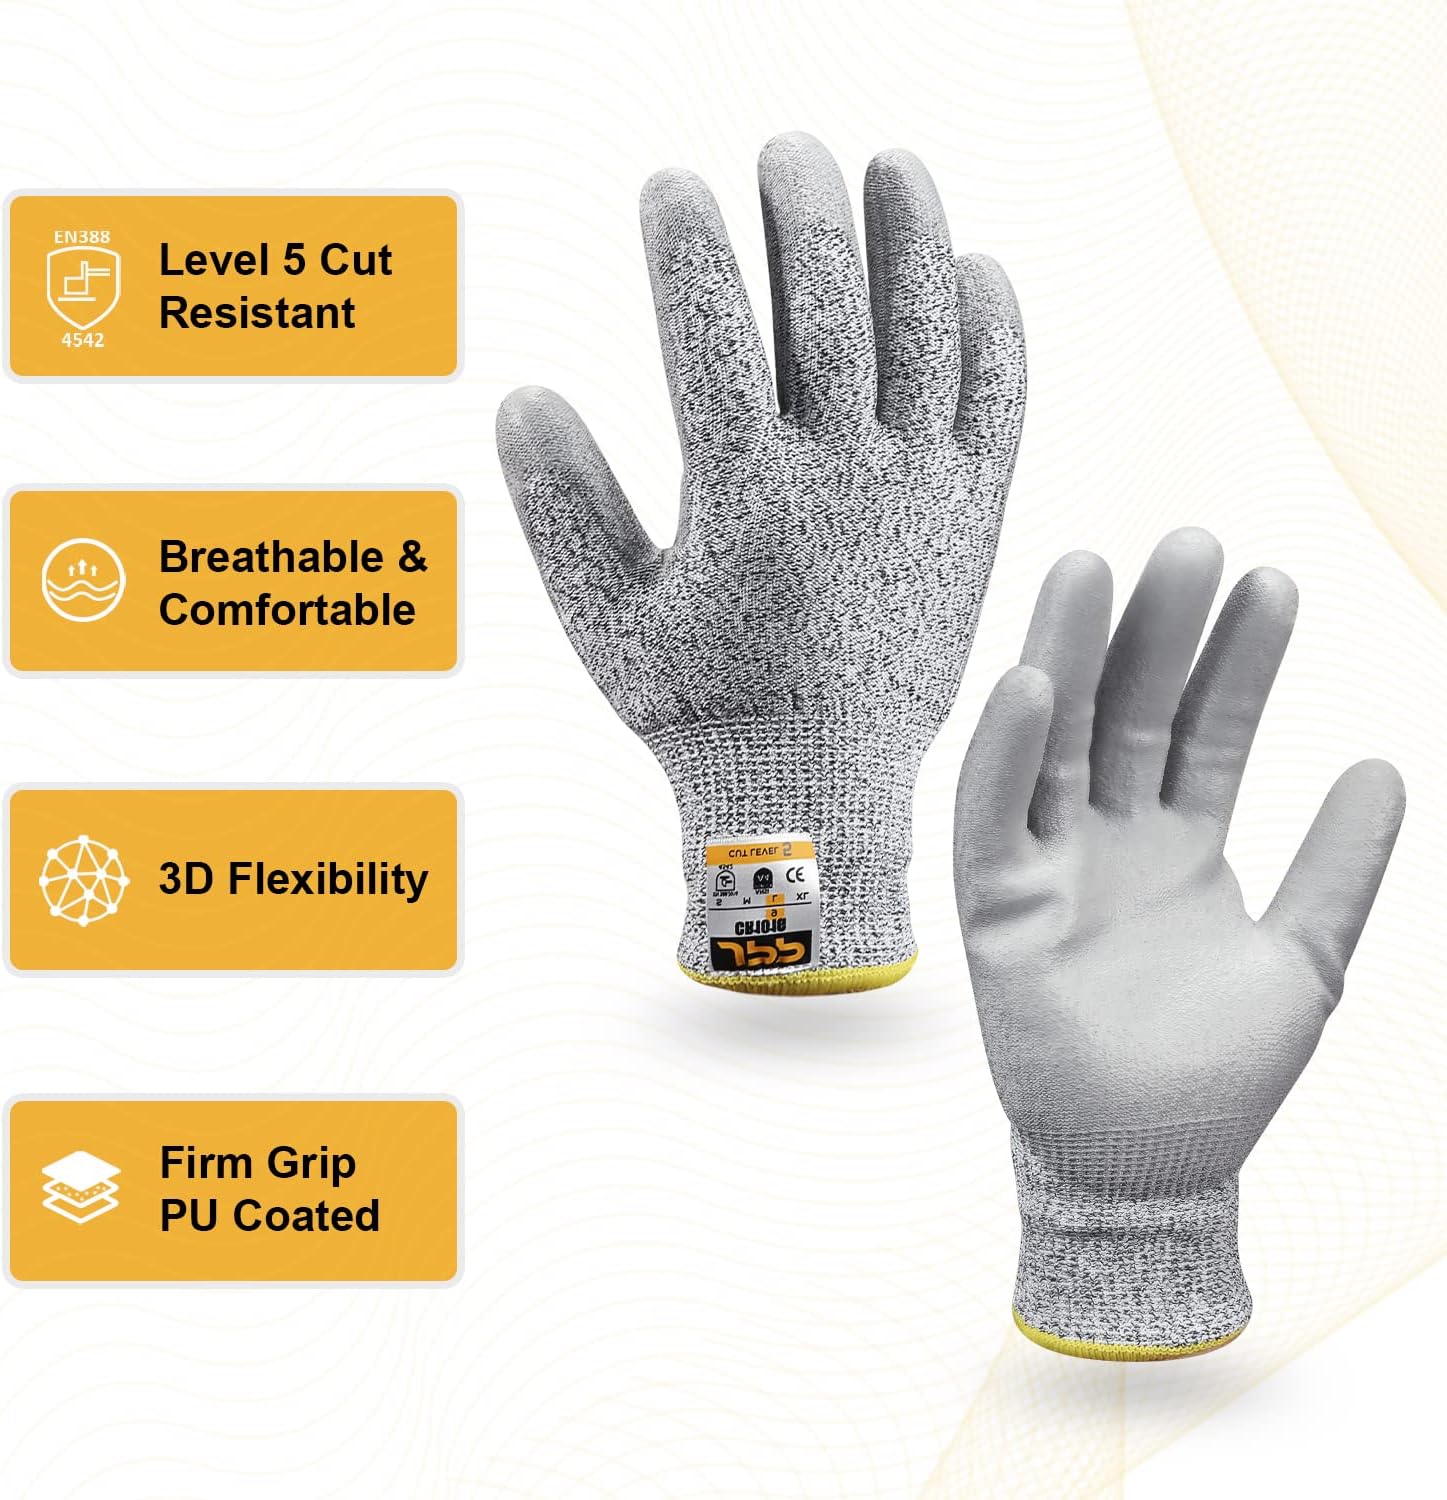 JPP Premium Cut Resistant Gloves, CE Level 5 Protection, PU Coated Cut